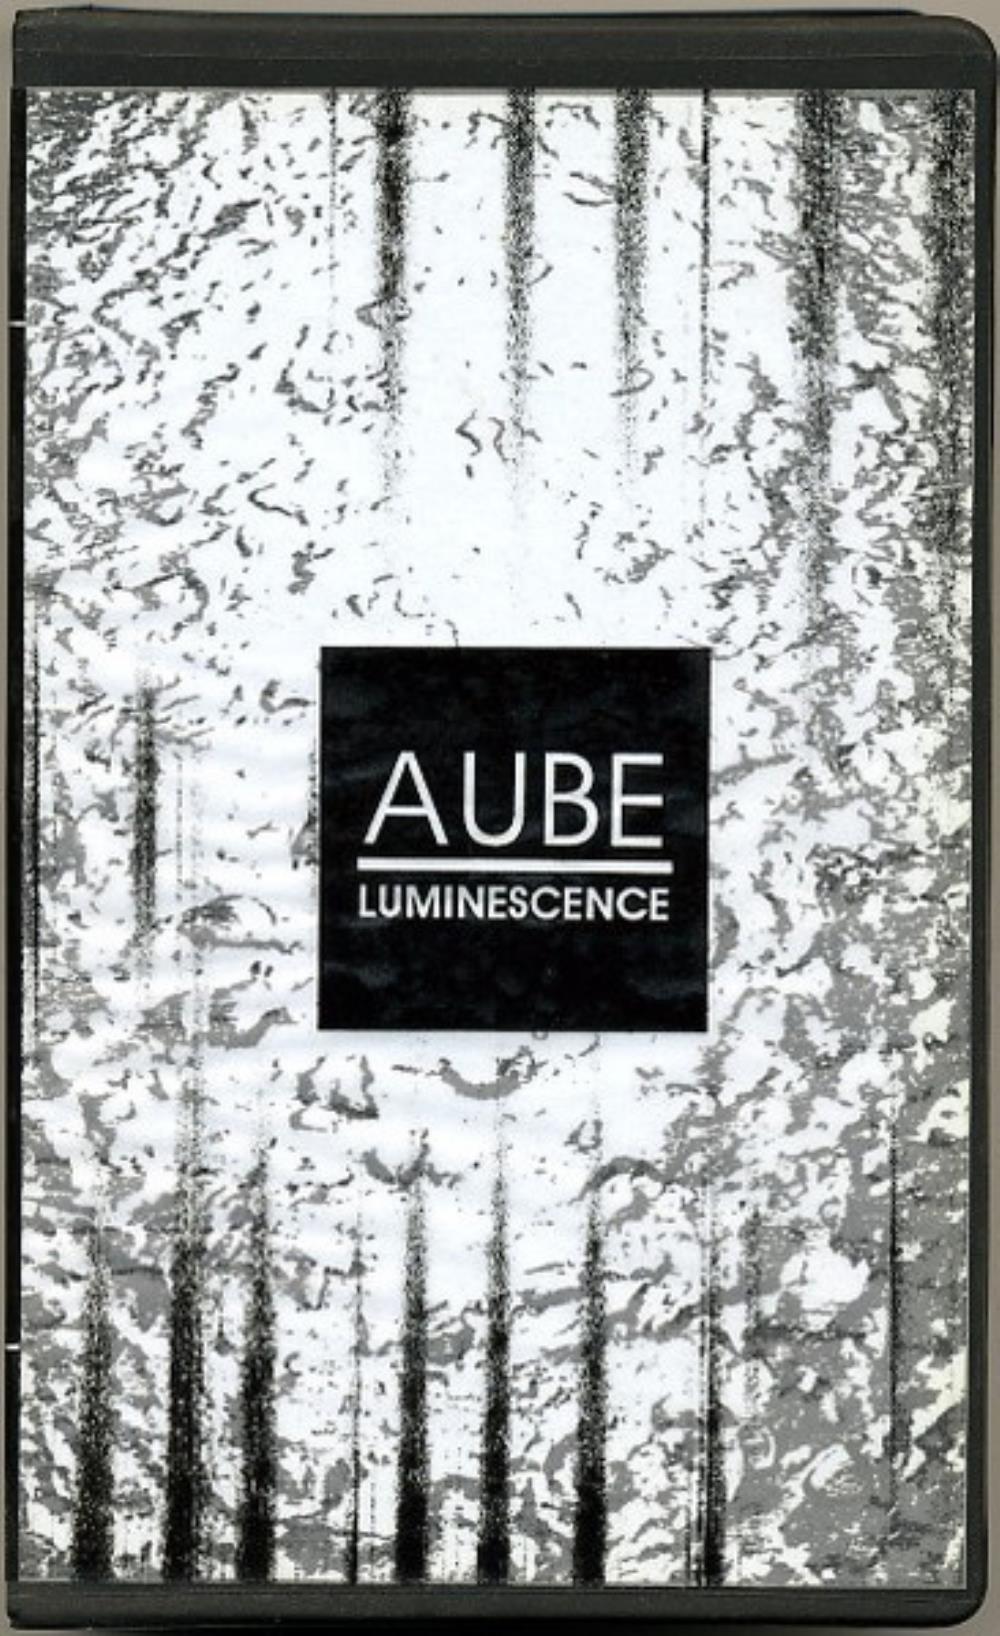 Aube Luminescence album cover